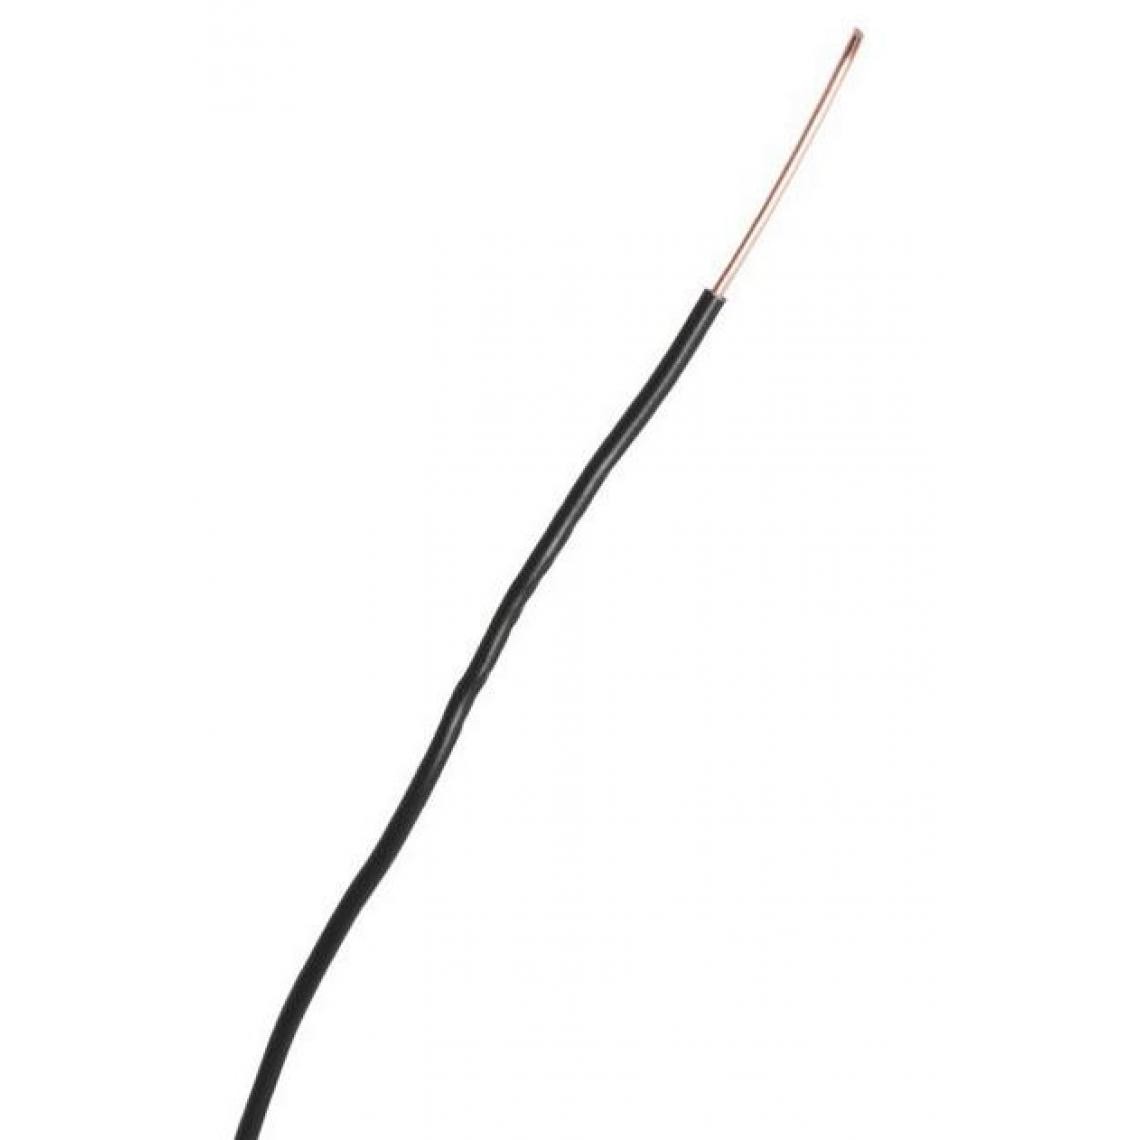 Lynelec - Lynelec - Fil rigide domestique H07 V-U noir 2,5 mm² Ø 3,9 mm - Cordons d'alimentation